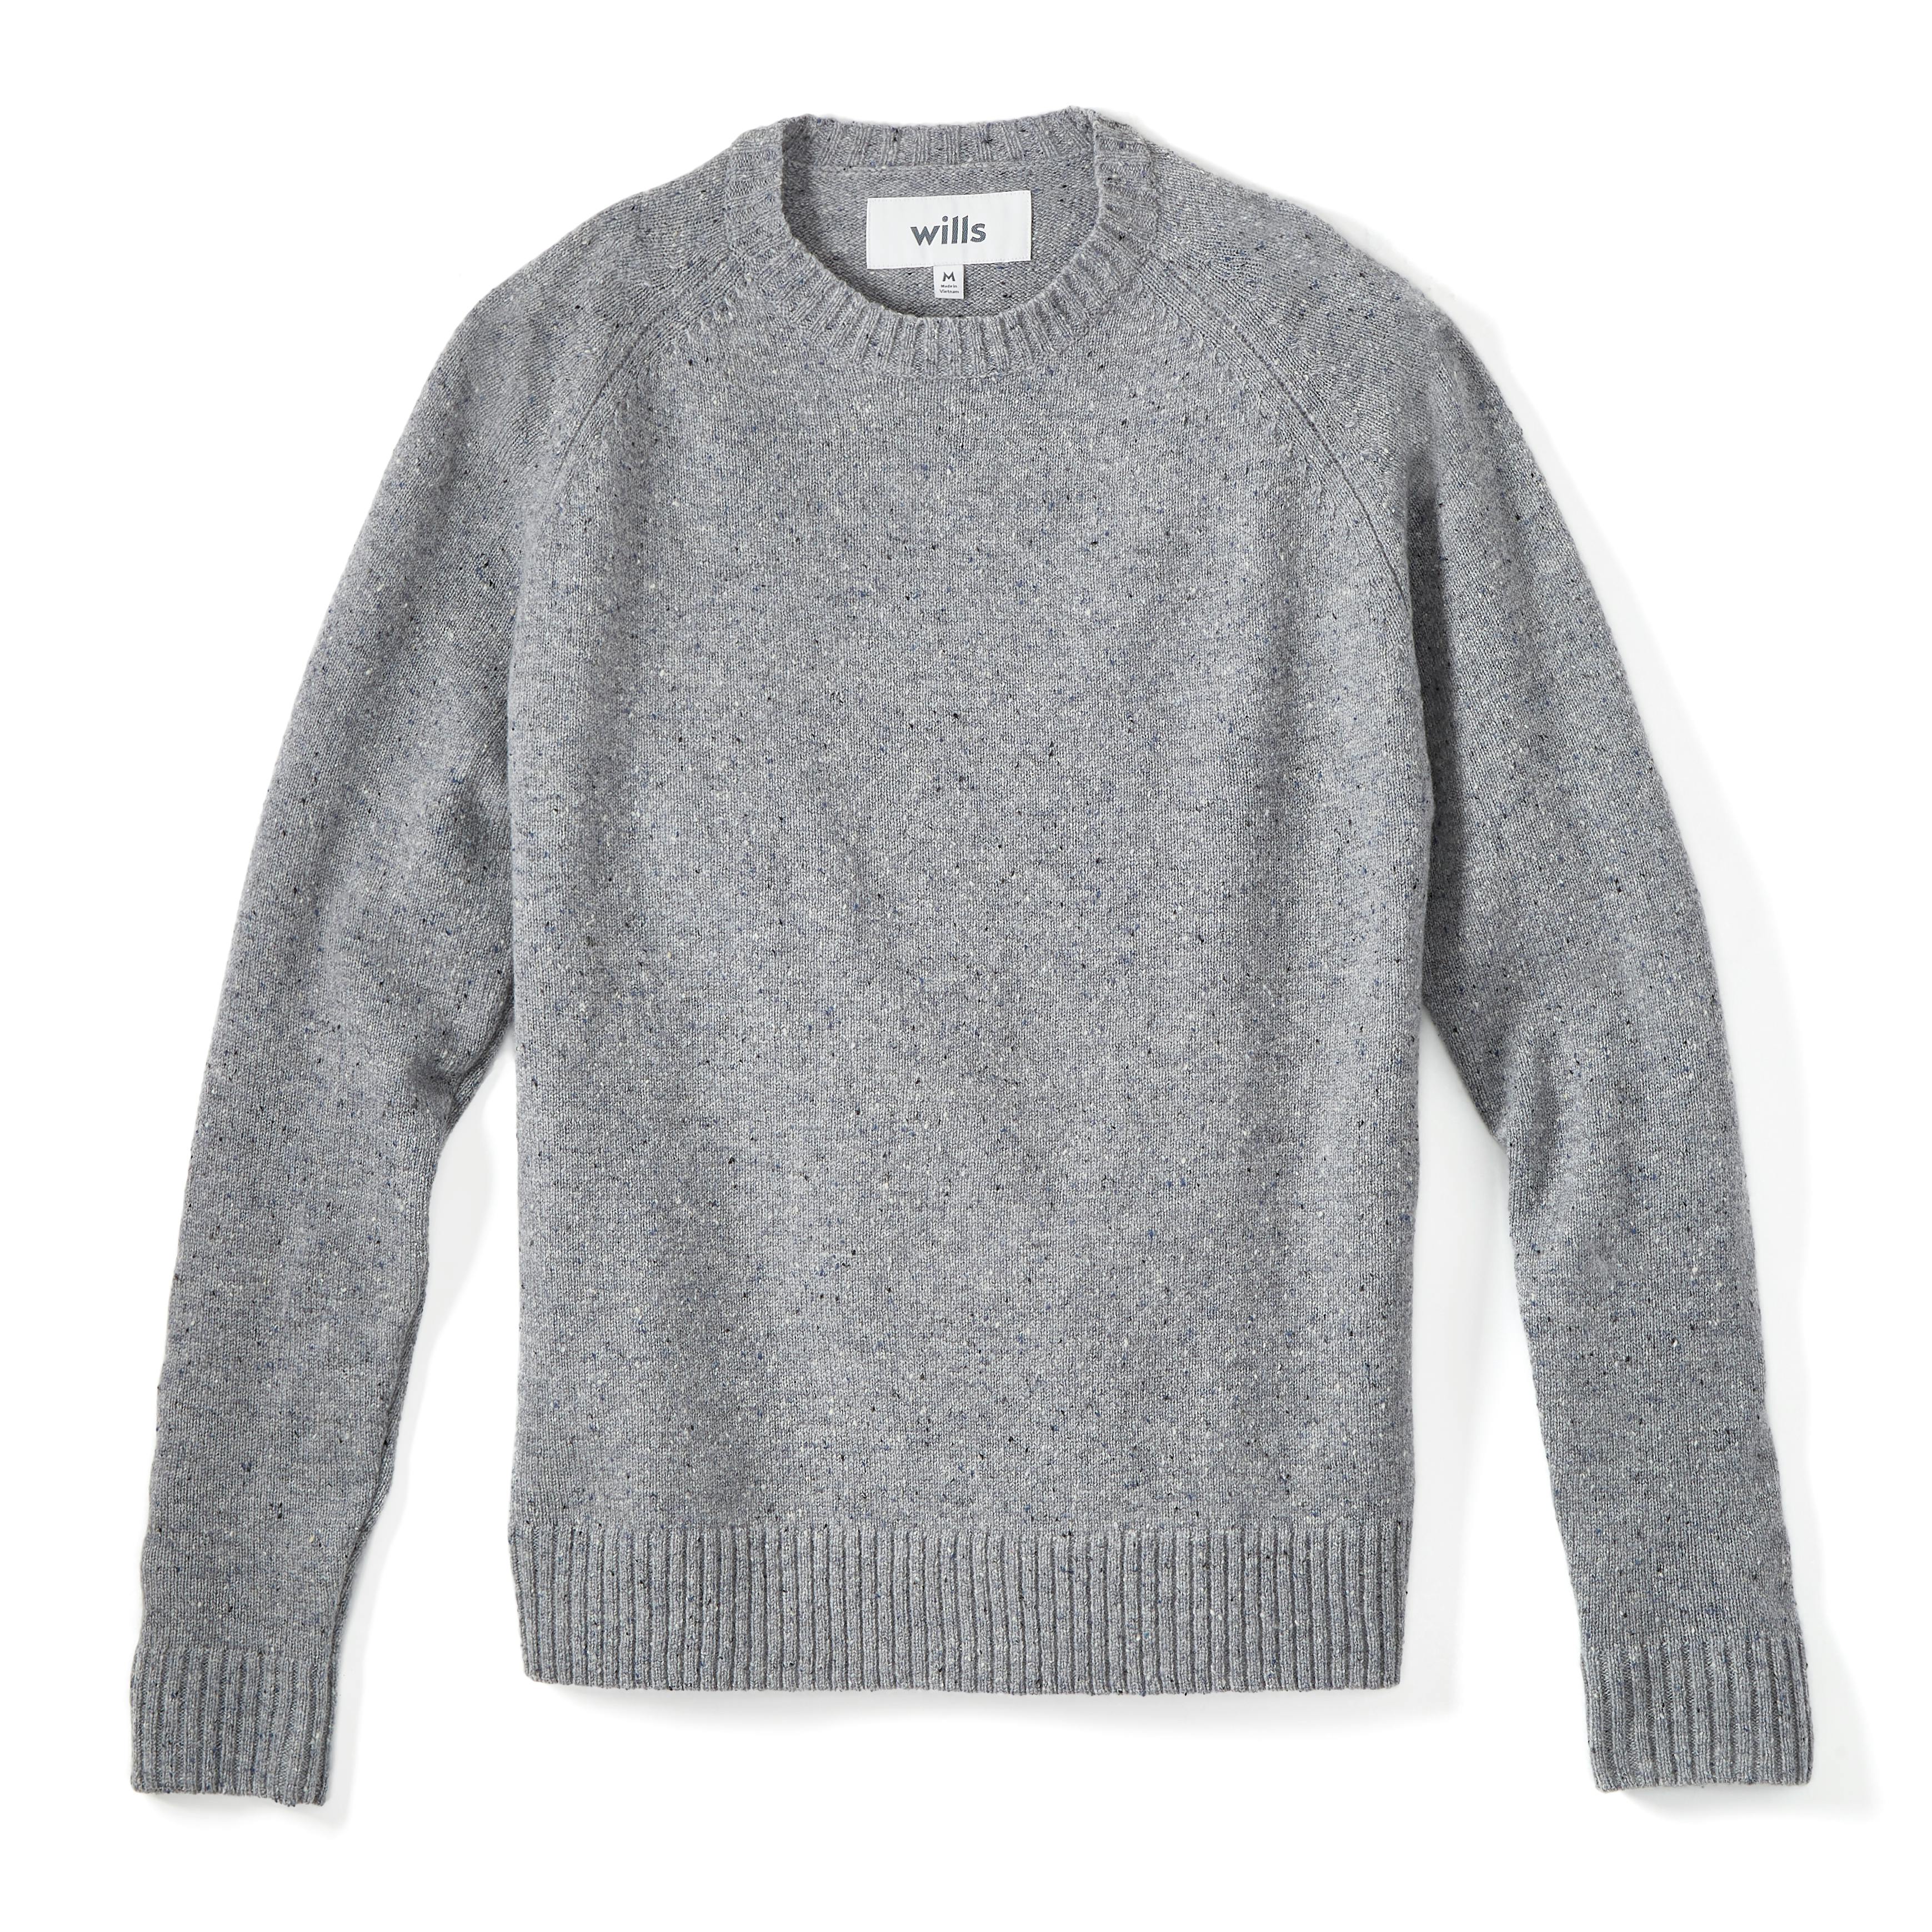 Merino Wool Crewneck Sweater for Male - Flecked Dark Gray - Size S - Lanvin